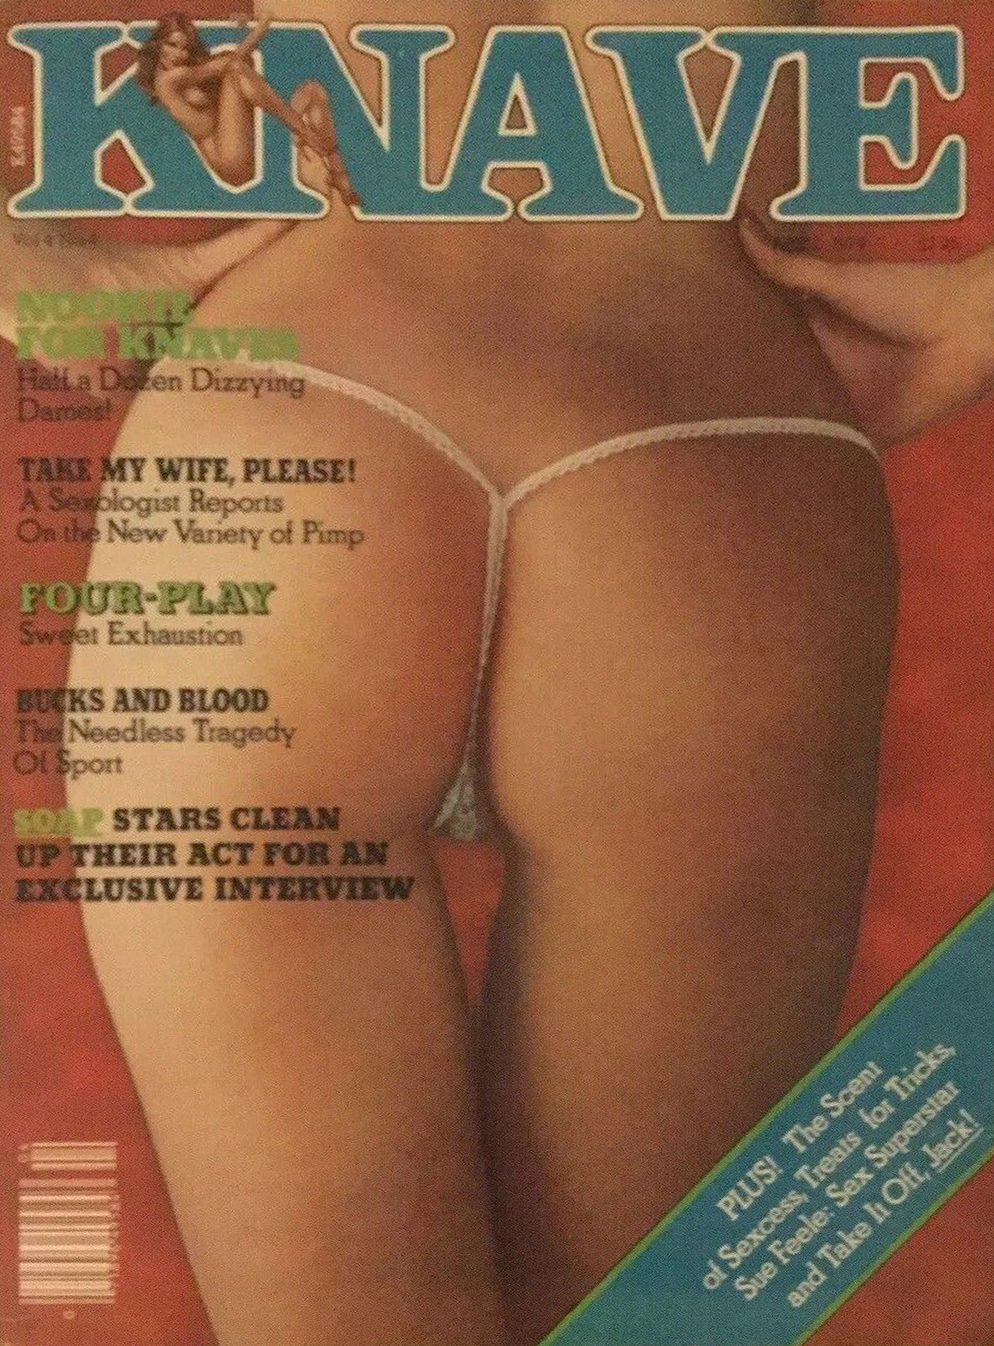 Knave Vol. 4 # 4 magazine back issue Knave UK magizine back copy Knave Vol. 4 # 4 British Adult Nude Women Magazine Back Issue Published by Galaxy Publications Limited. .